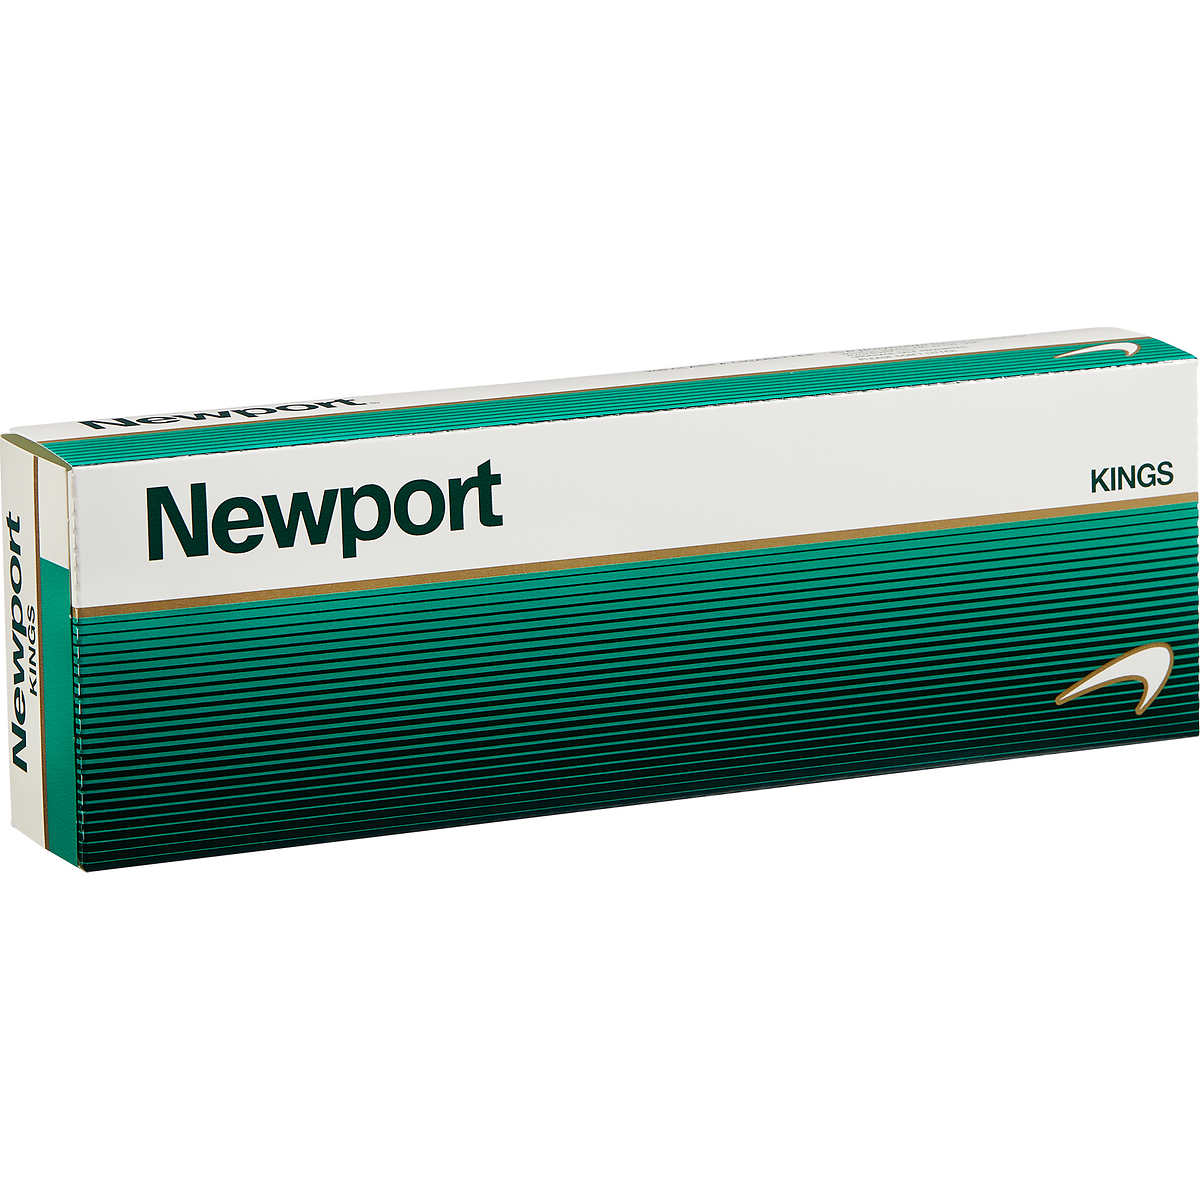 Newport Menthol Kings Soft Box of 10 Packs Hello Cigarettes